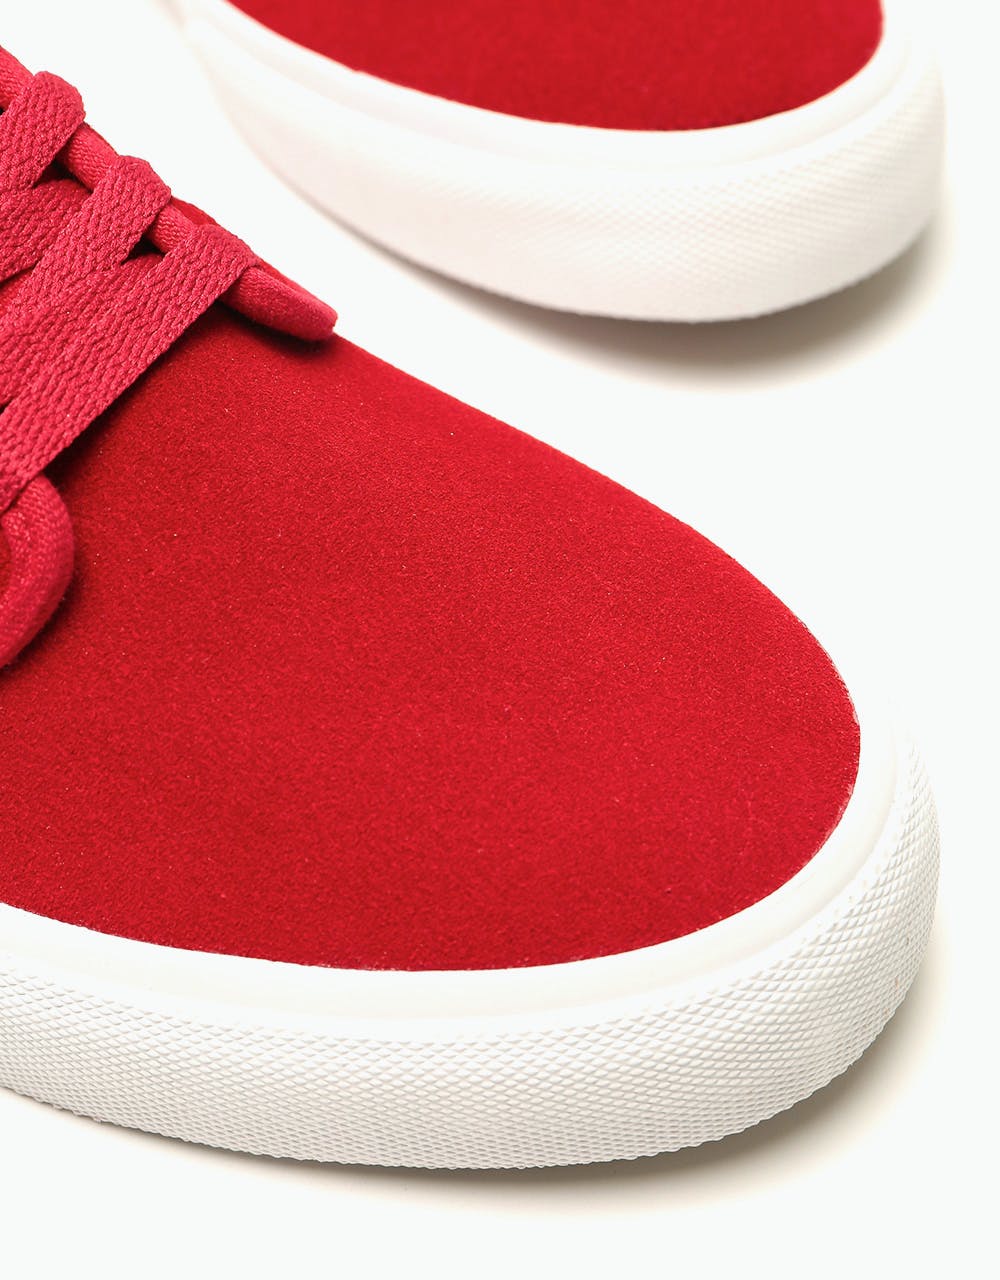 Emerica x Santa Cruz Wino Standard Skate Shoes - Red/White